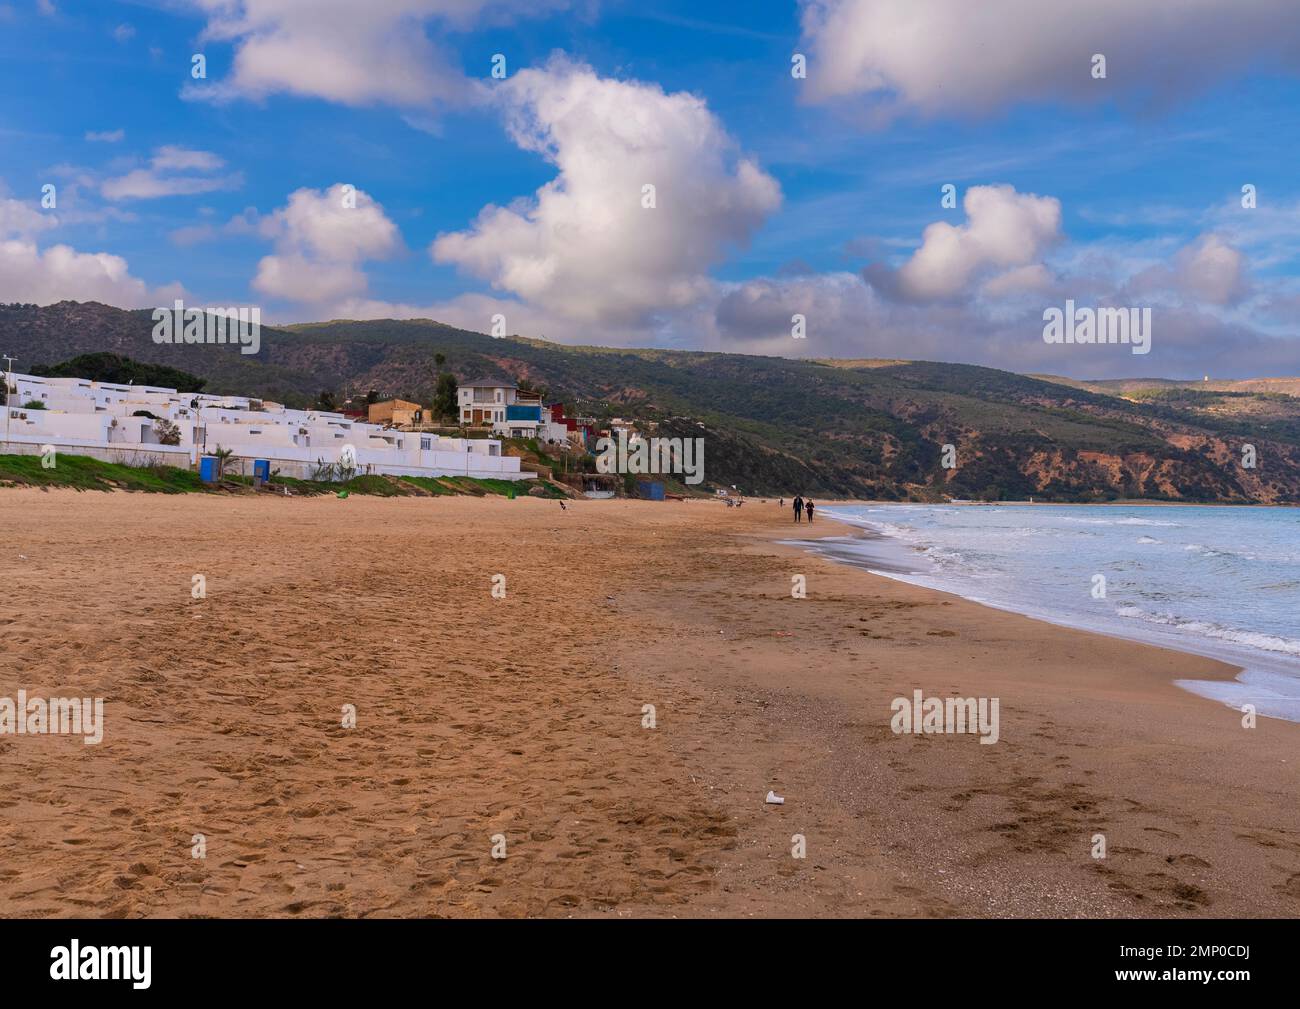 Les Andalouses Beach Resort erbaut von Fernand Pouillon, Nordafrika, Oran, Algerien Stockfoto